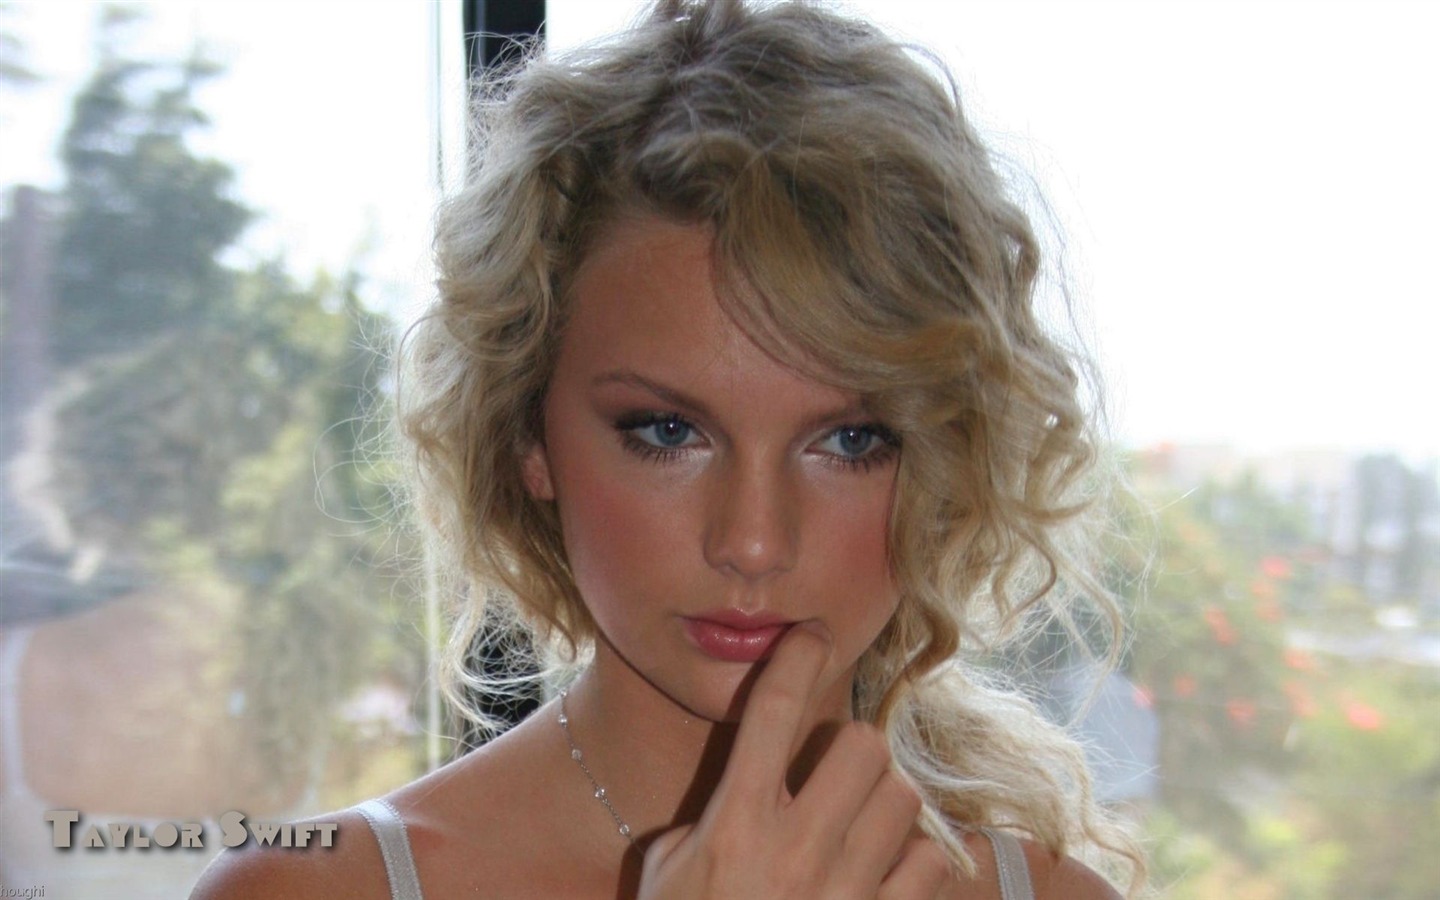 Taylor Swift beautiful wallpaper #32 - 1440x900